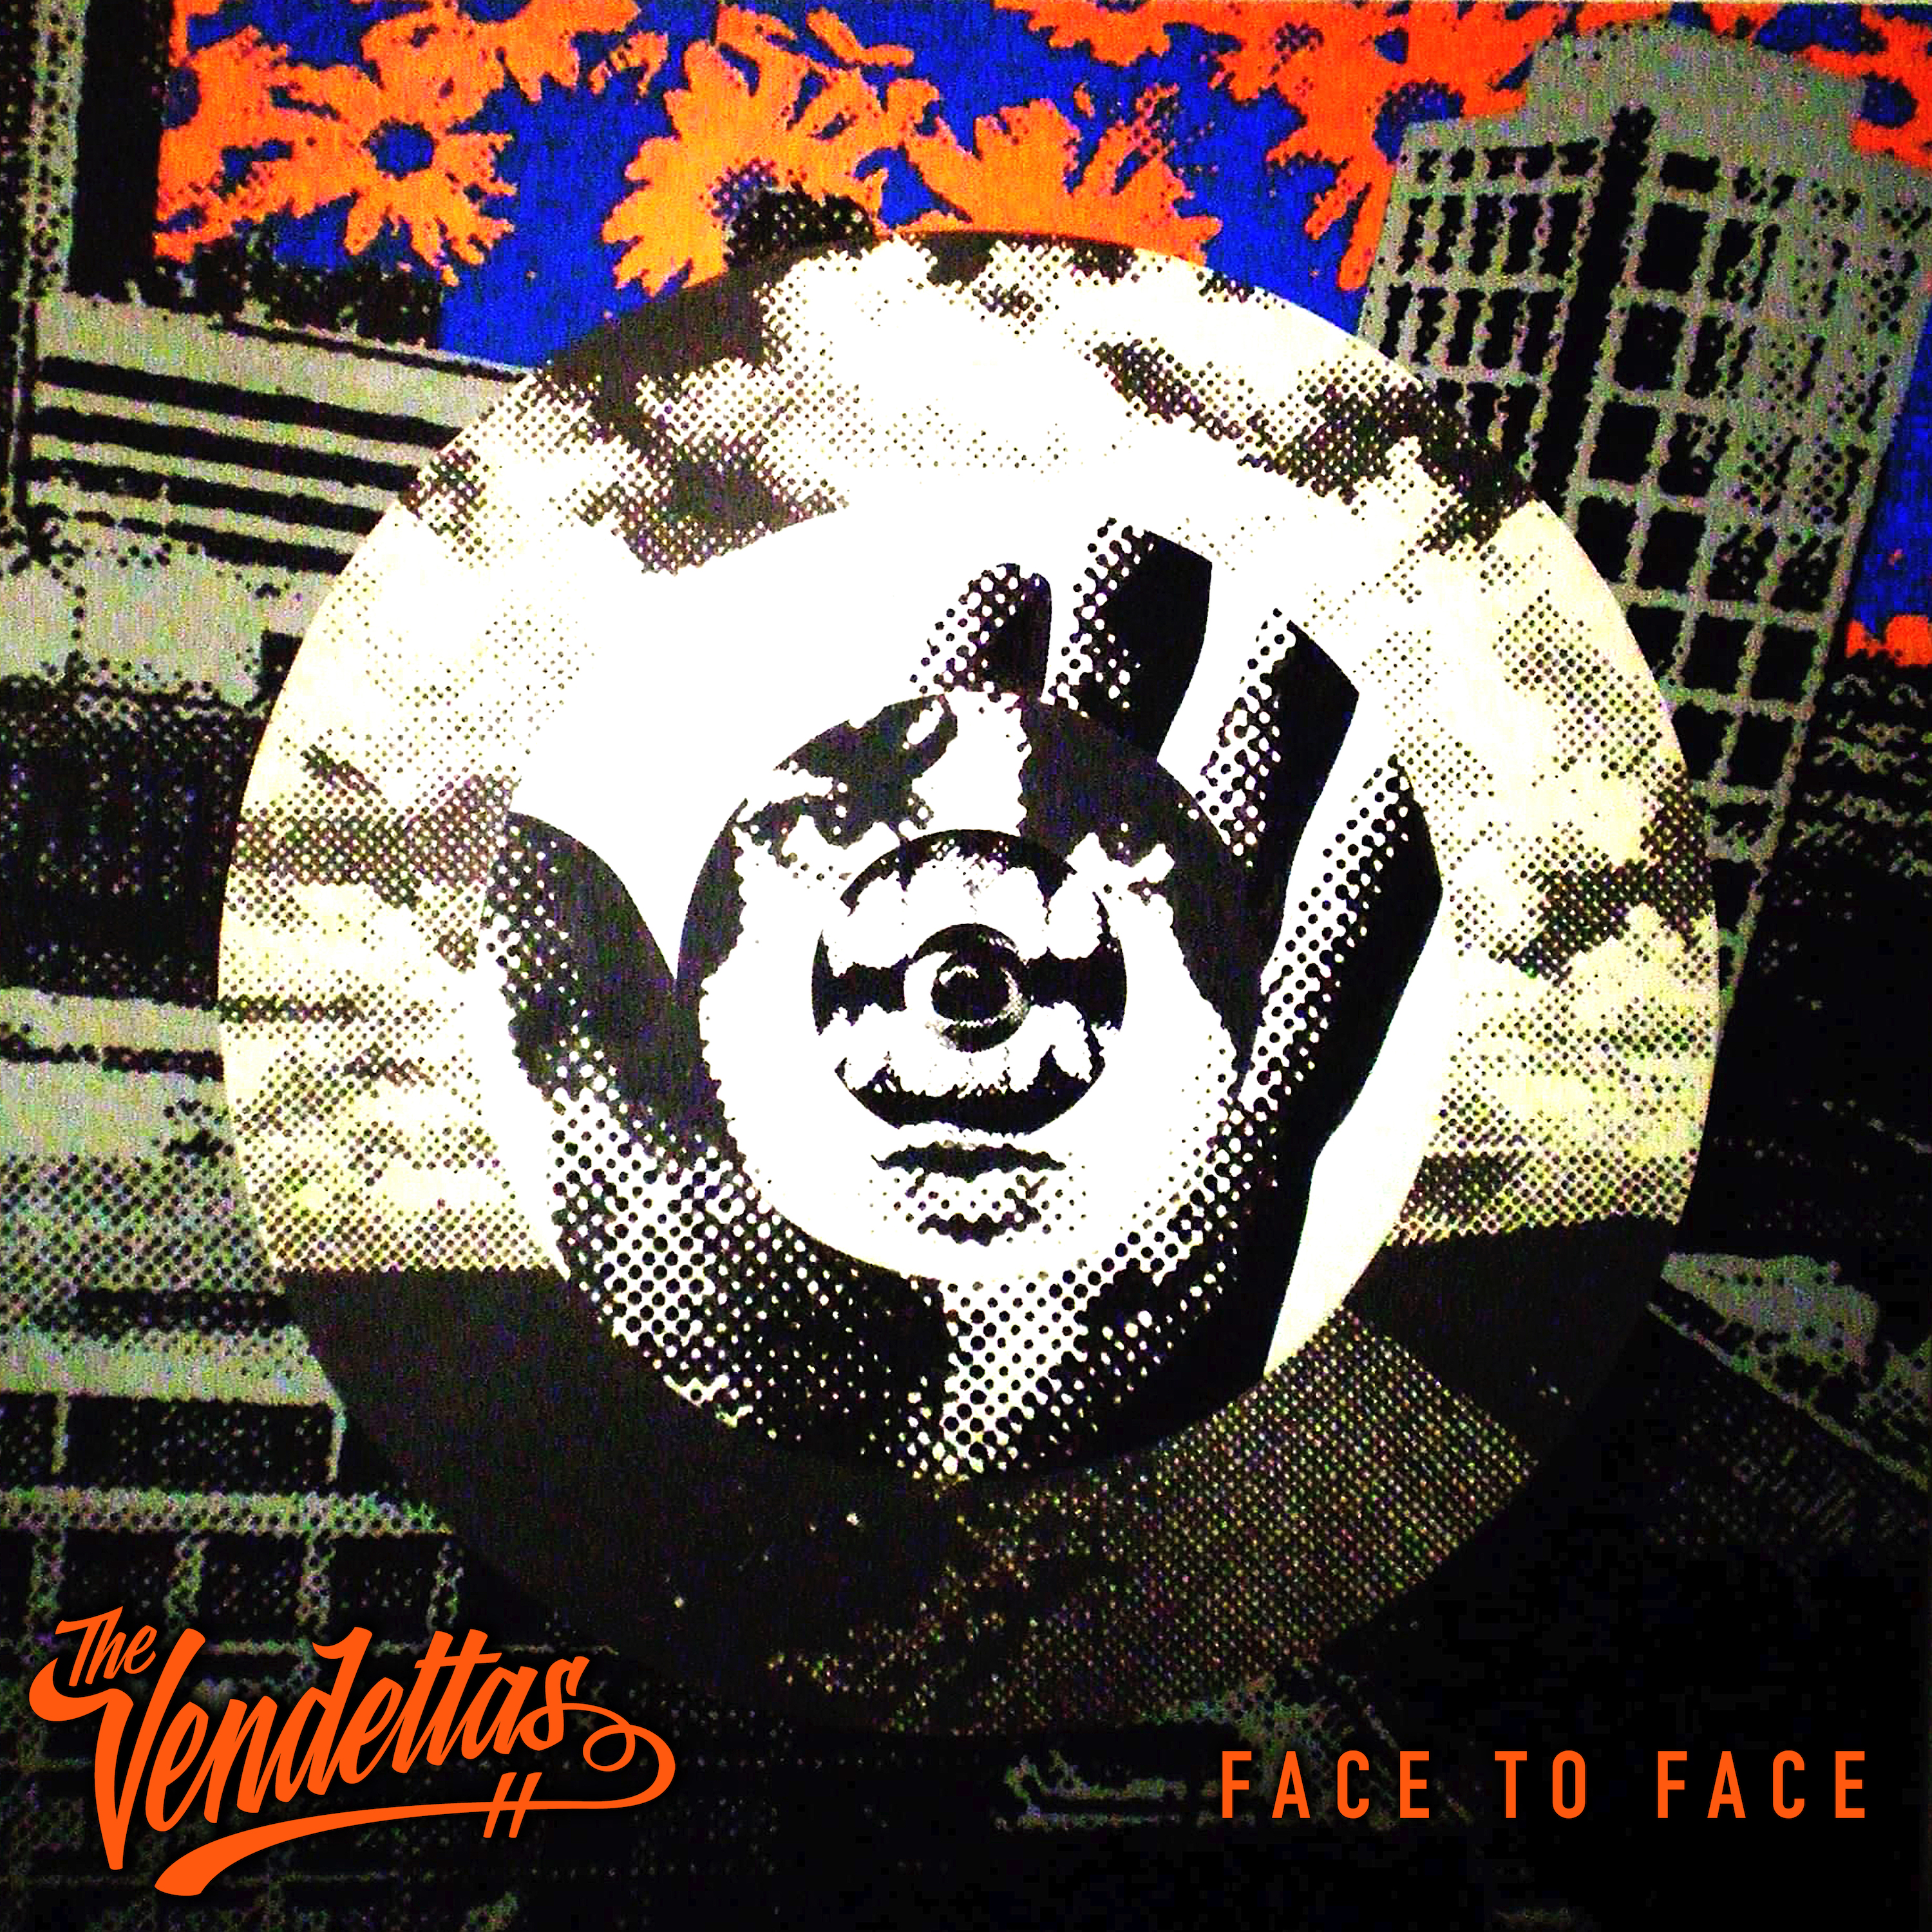 The Vendettas - Face To Face - Digital Single Artwork